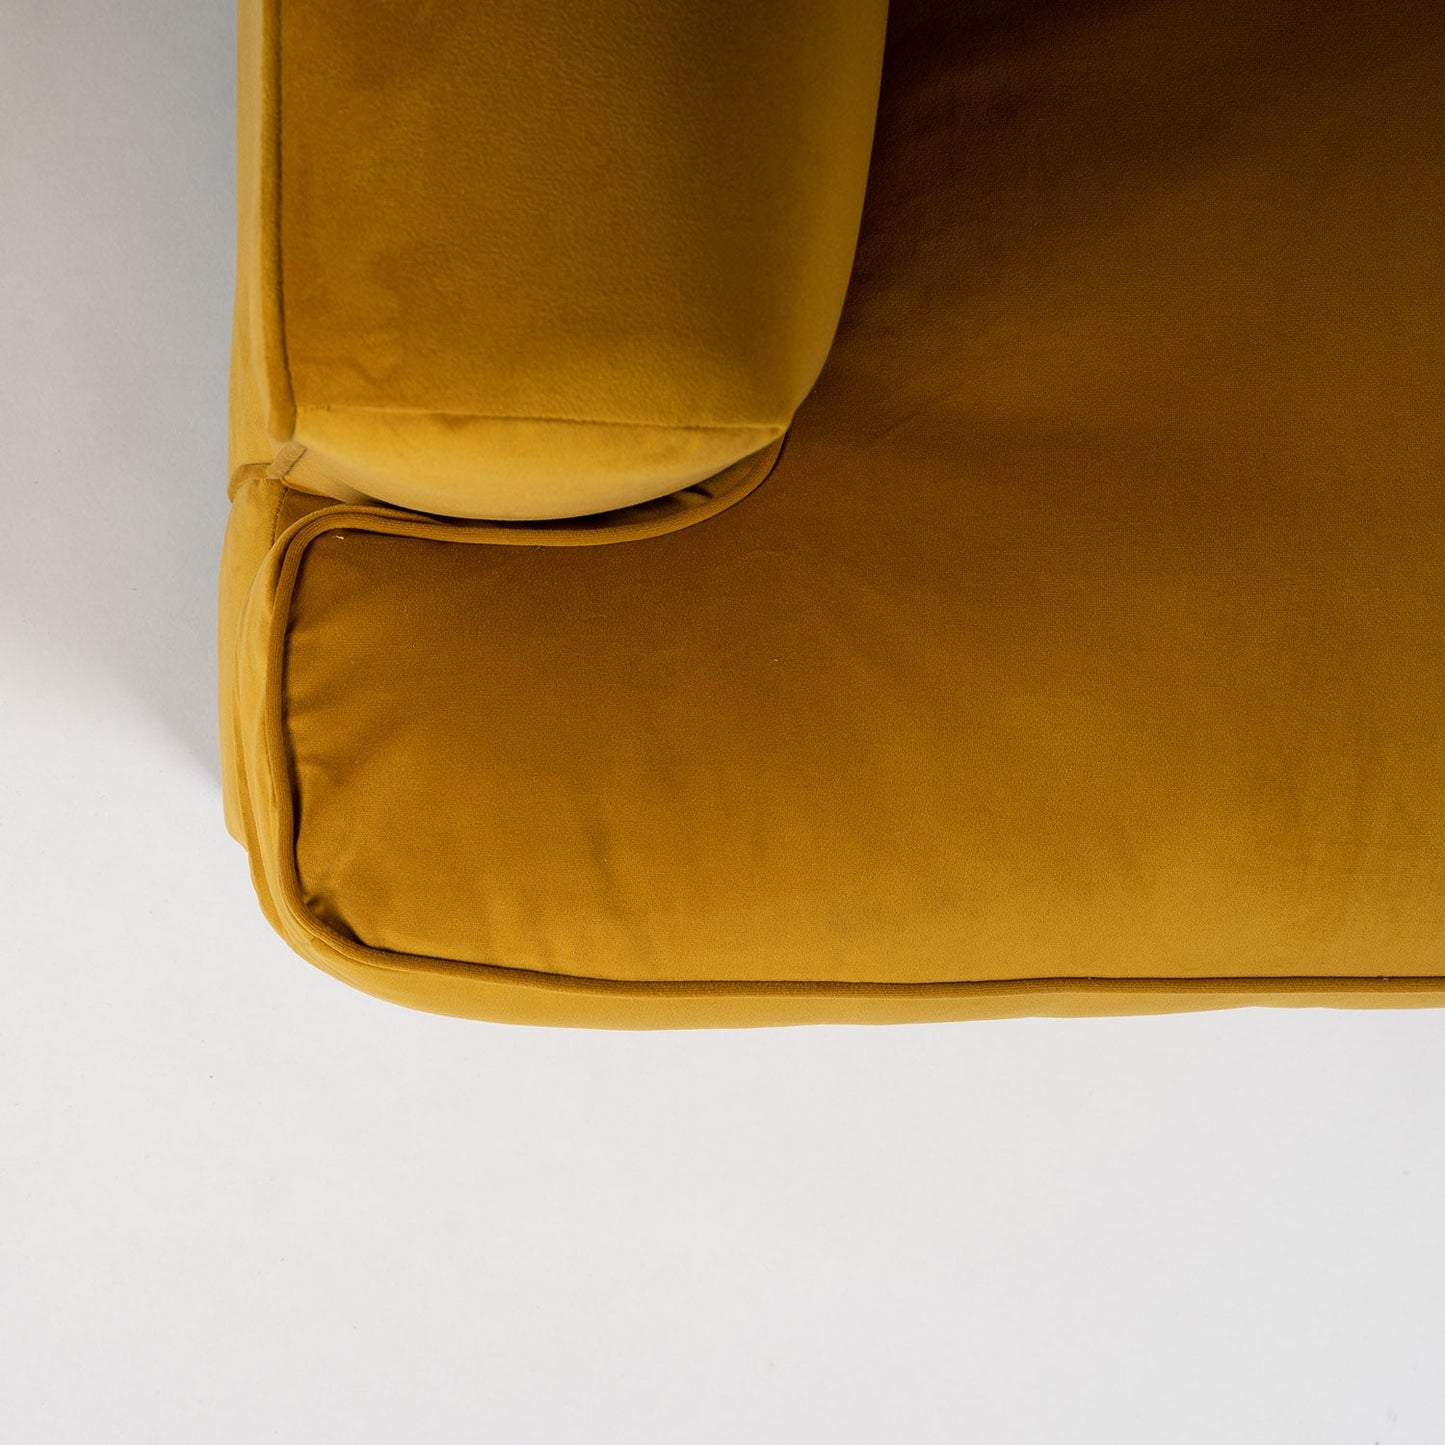 Frankie medium sofa - 3 seater - Turmeric Yellow